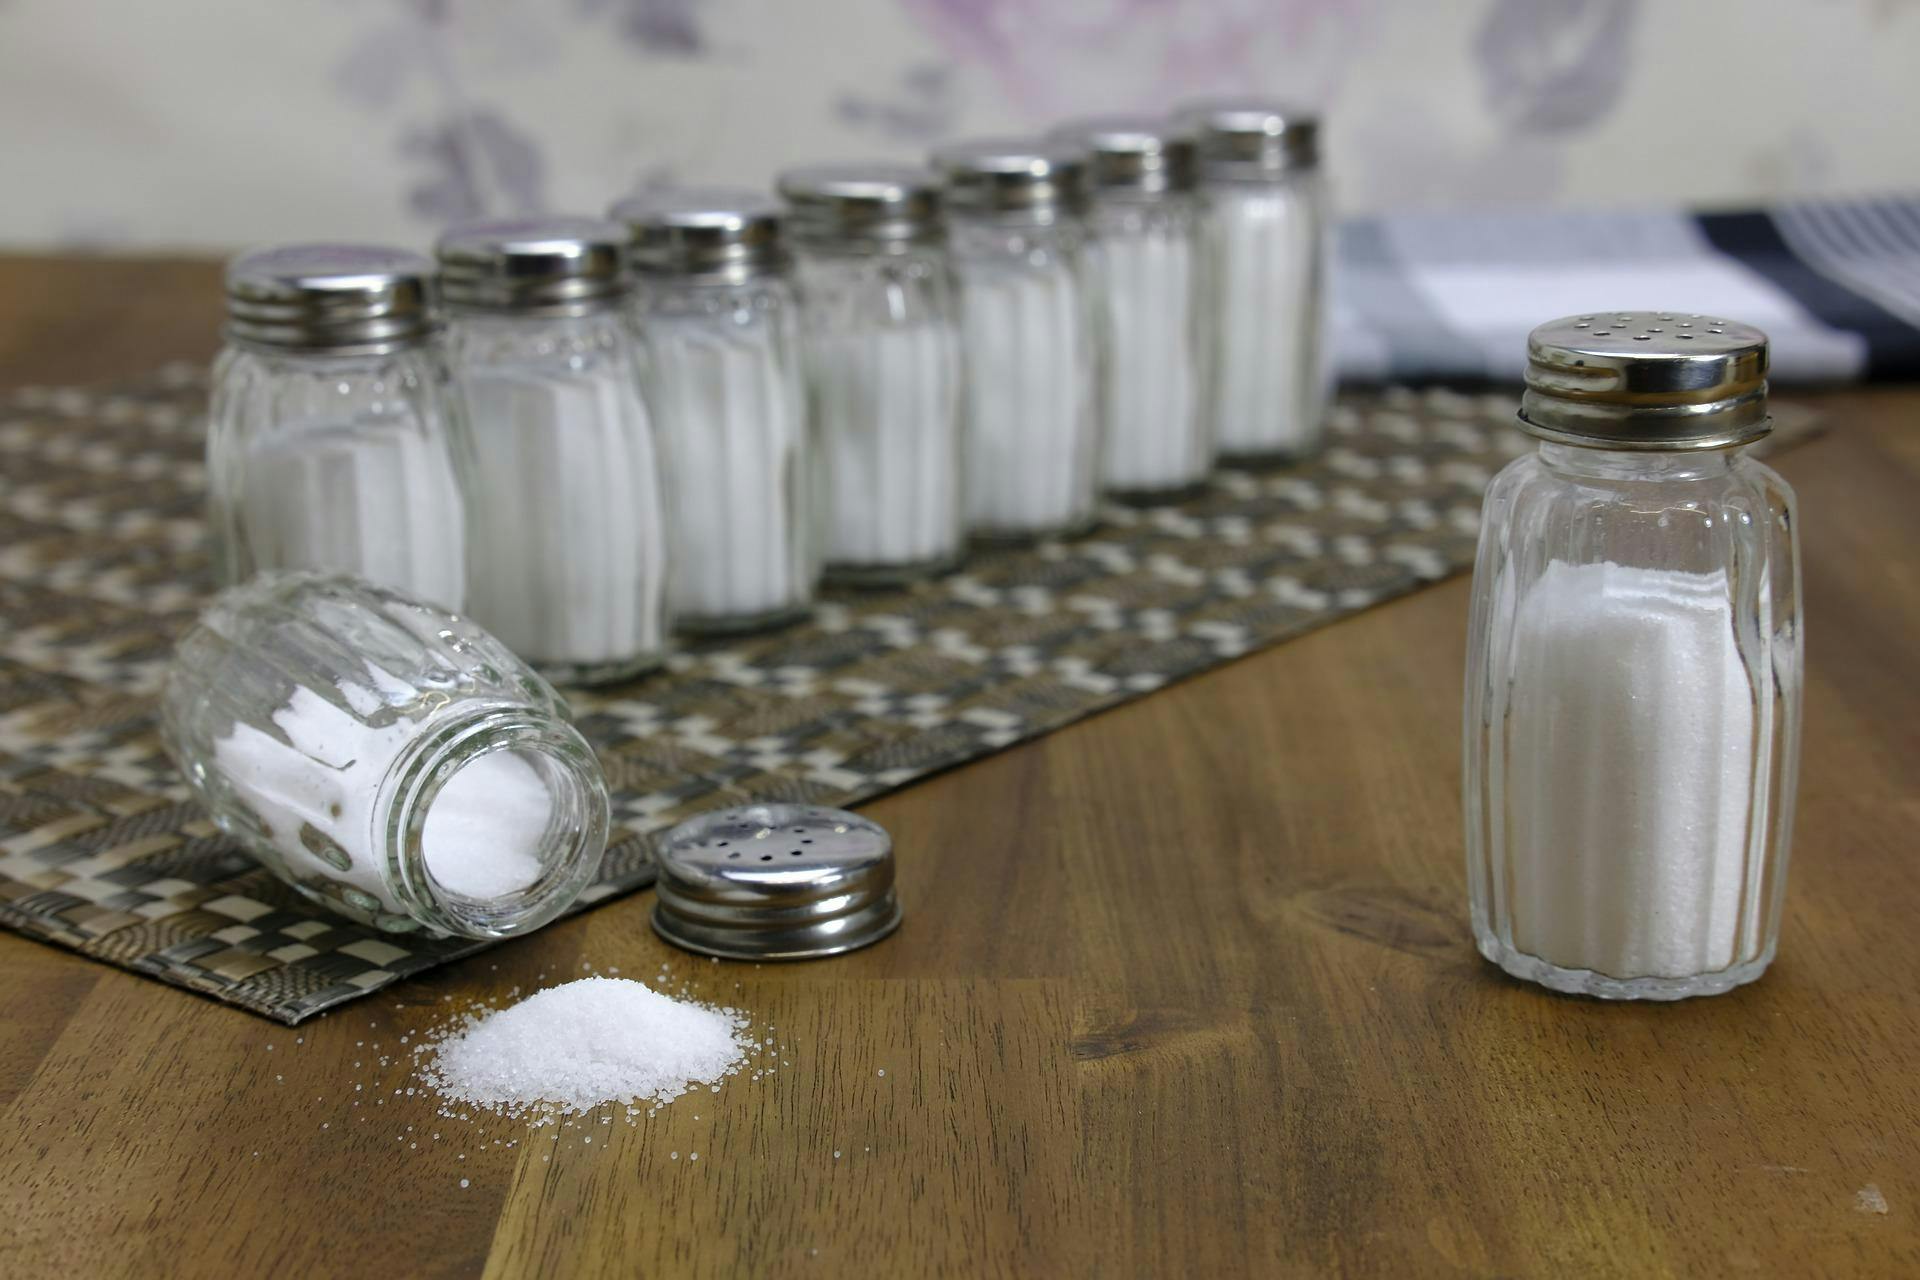 Stock art depicting salt shakers on a dinner table